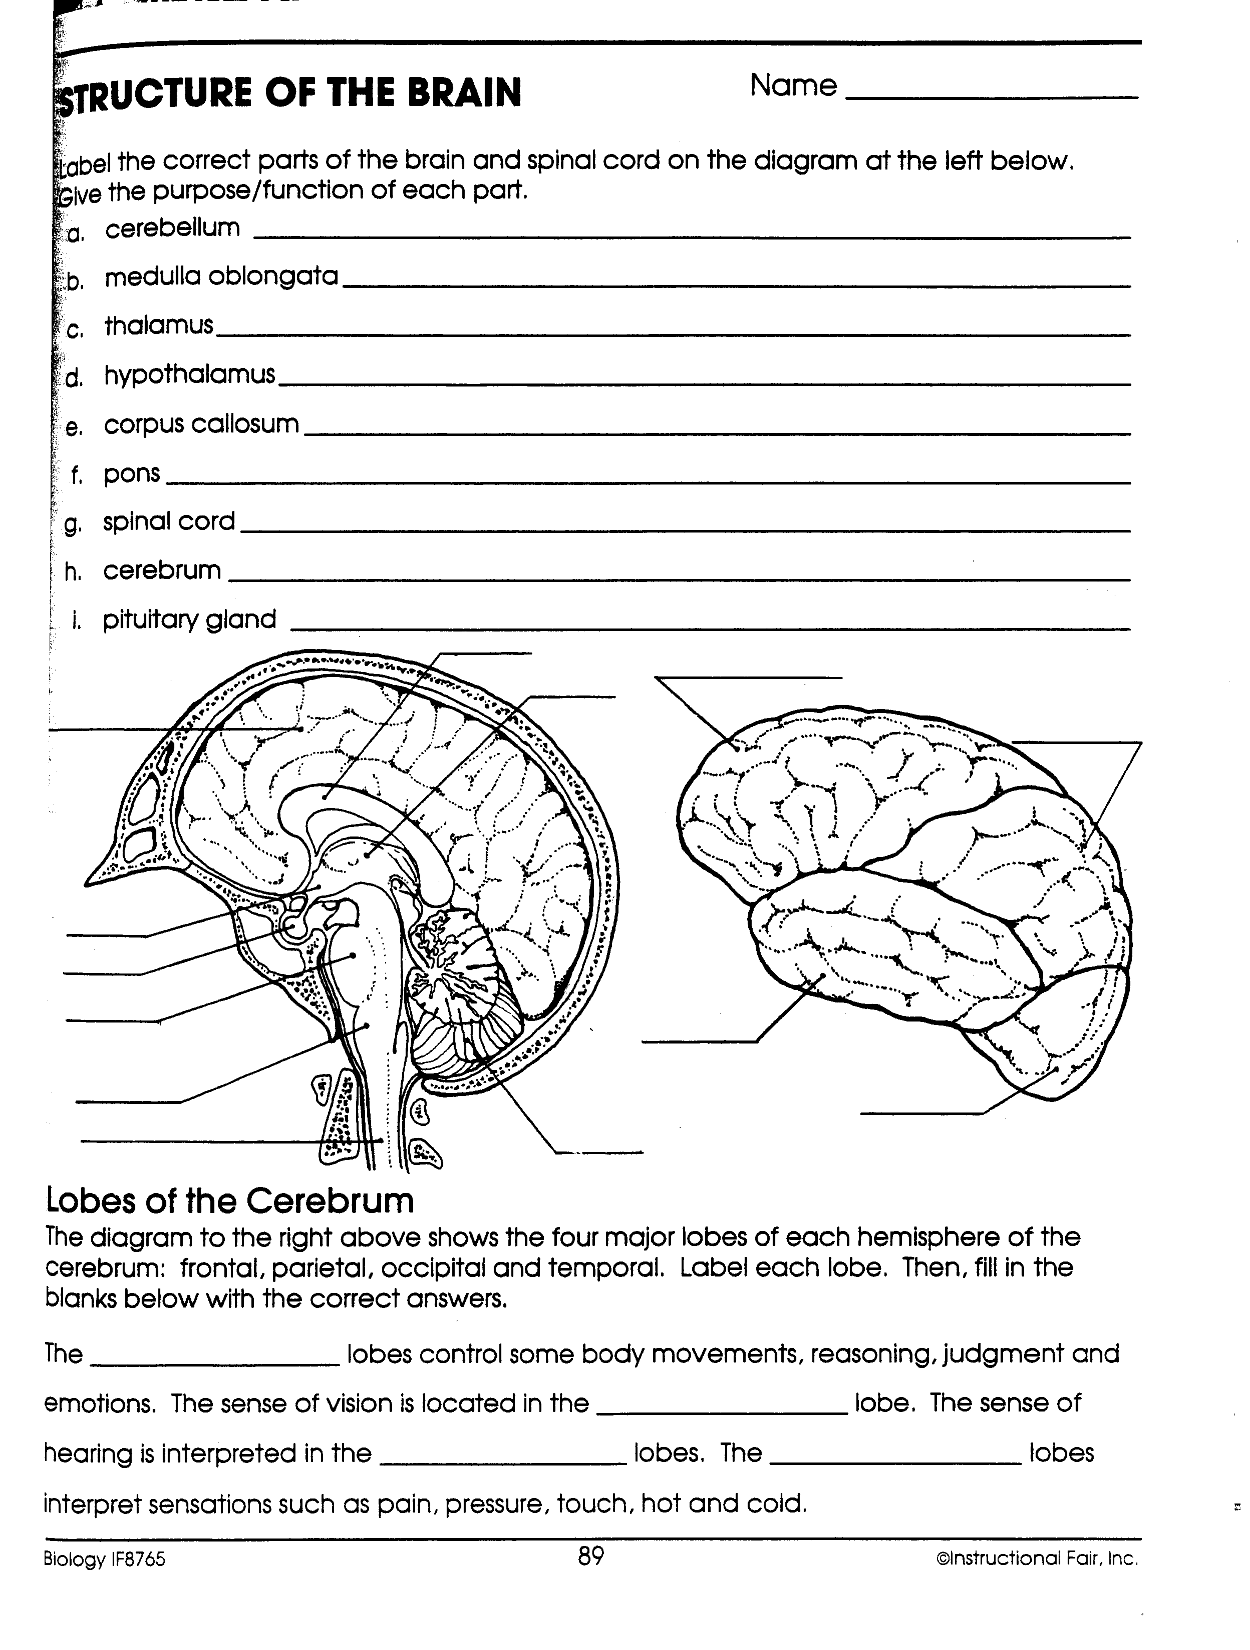 Brain capabilities. Brain Worksheet. Capabilities of Human Brain Worksheets. Brain structure and function. Human Brain Worksheets.